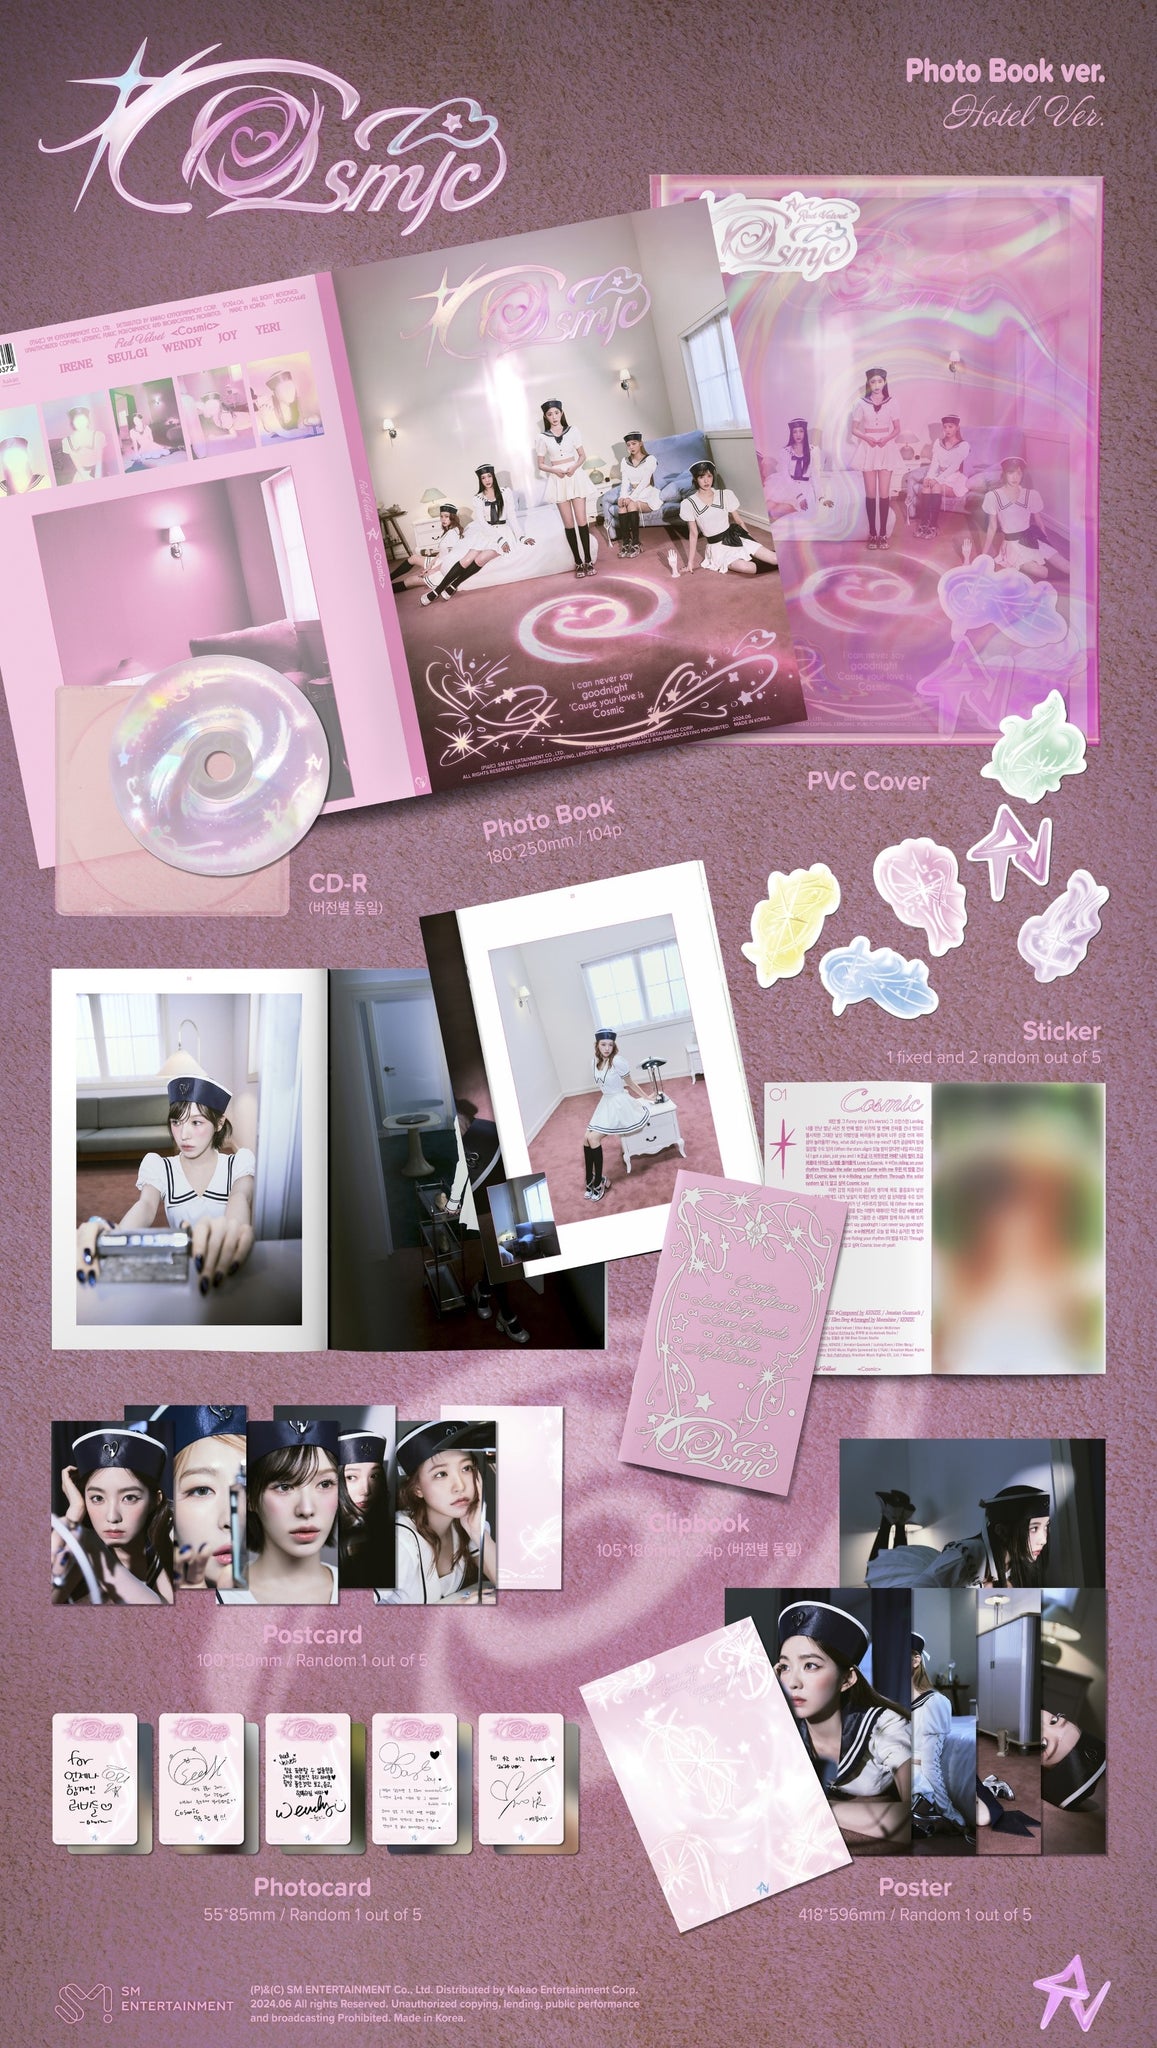 Red Velvet 7th Mini Album Cosmic (Photobook Ver.) - Hotel Version Inclusions: PVC Cover, Photobook, Clipbook, CD, Stickers, Postcard, Folded Poster, Photocard